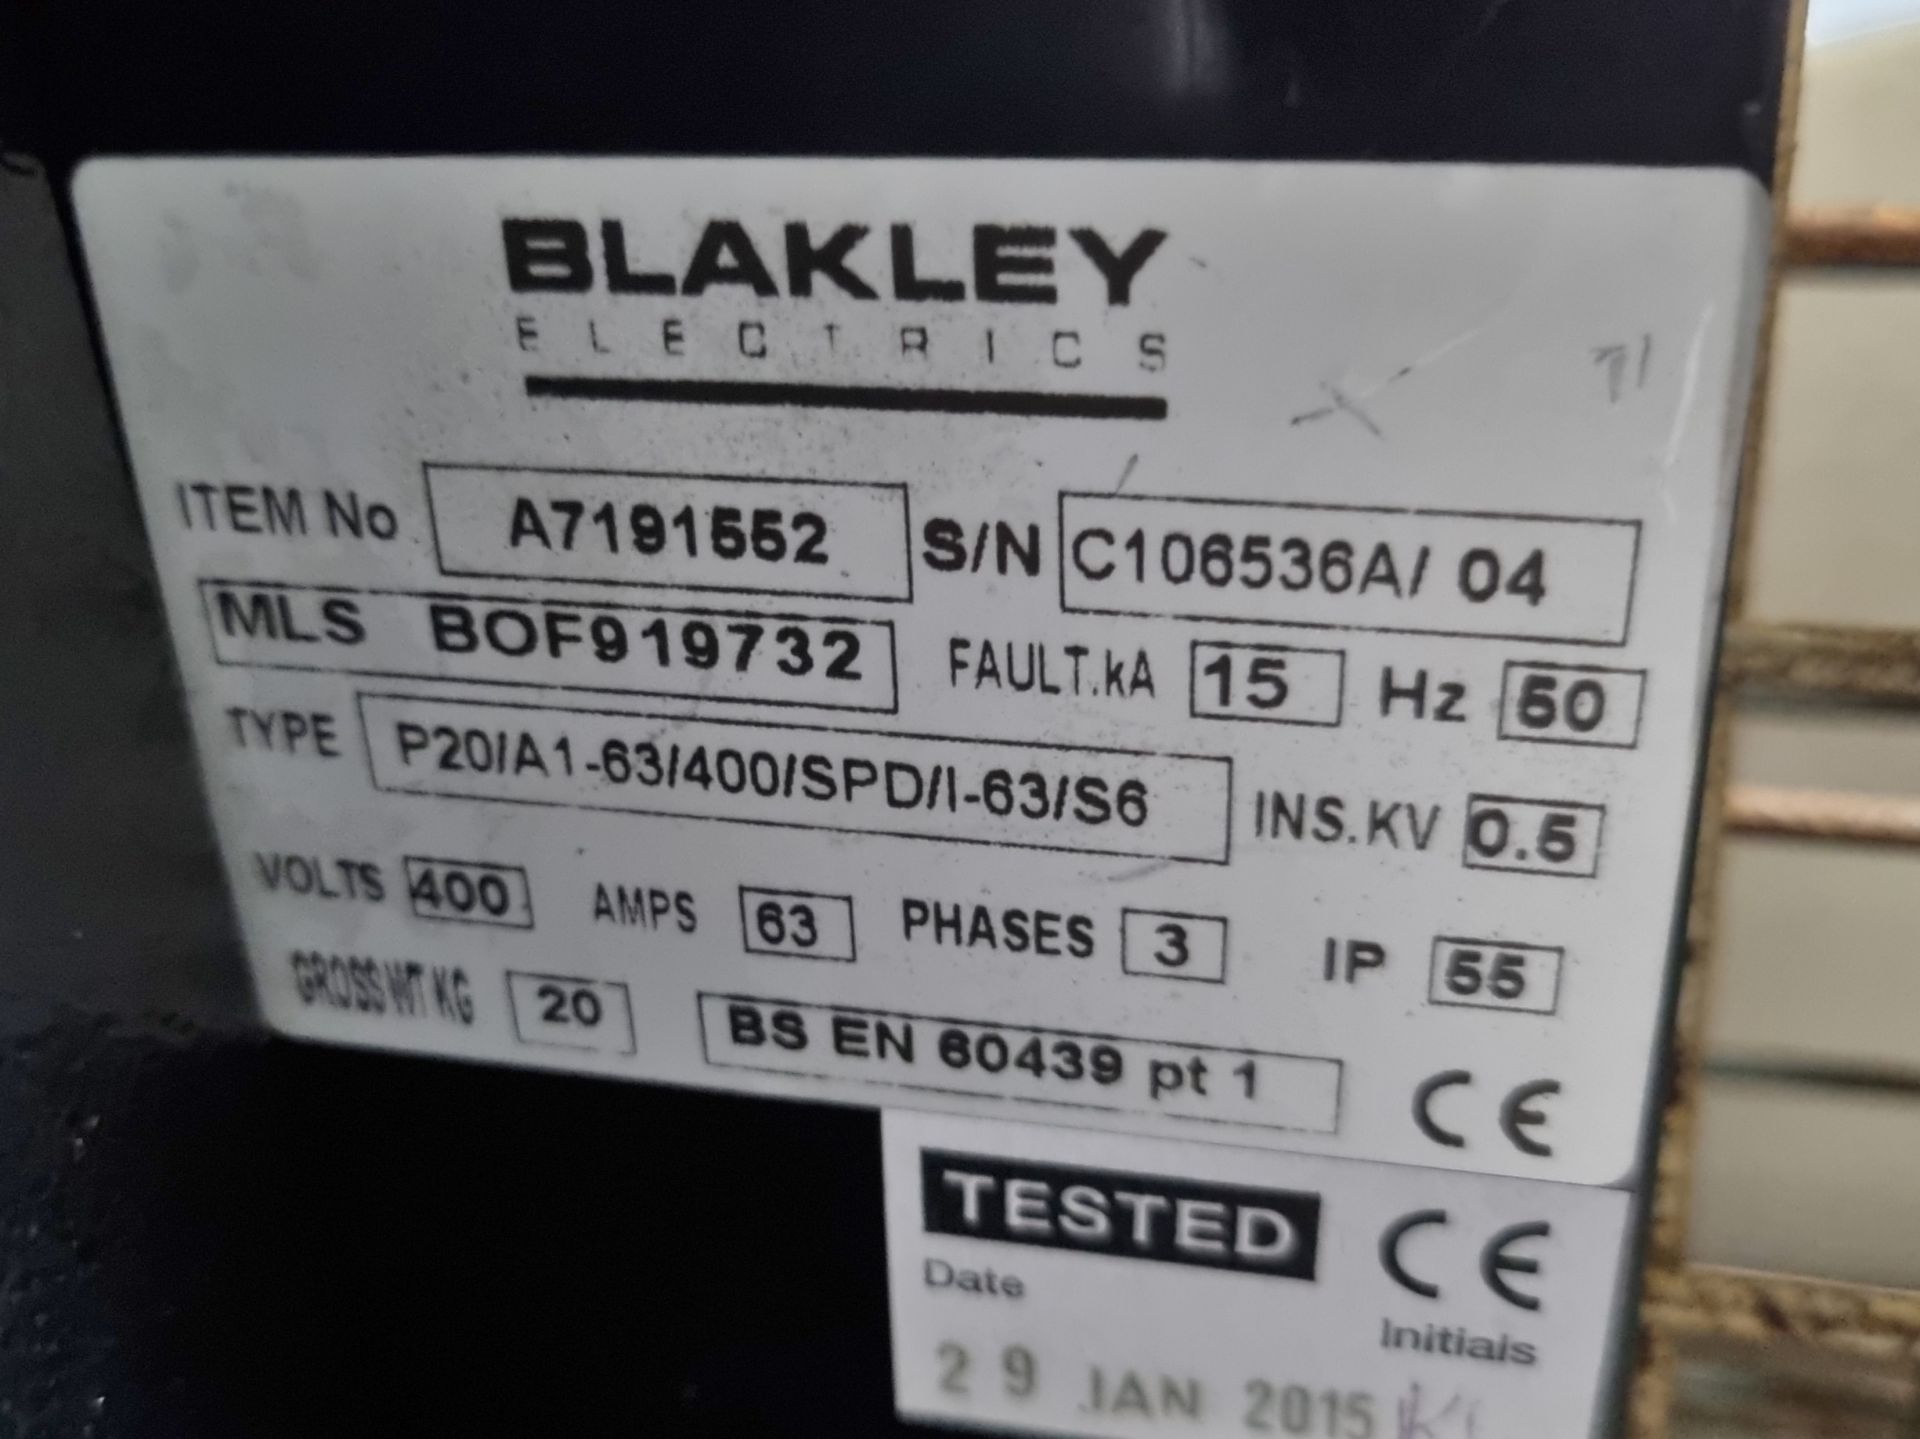 Blakley Electrics P20/A1-63/400/SPD/I-63/S6 powr distribution box - 400V - 63A - 3ph - 50hz - Image 3 of 3